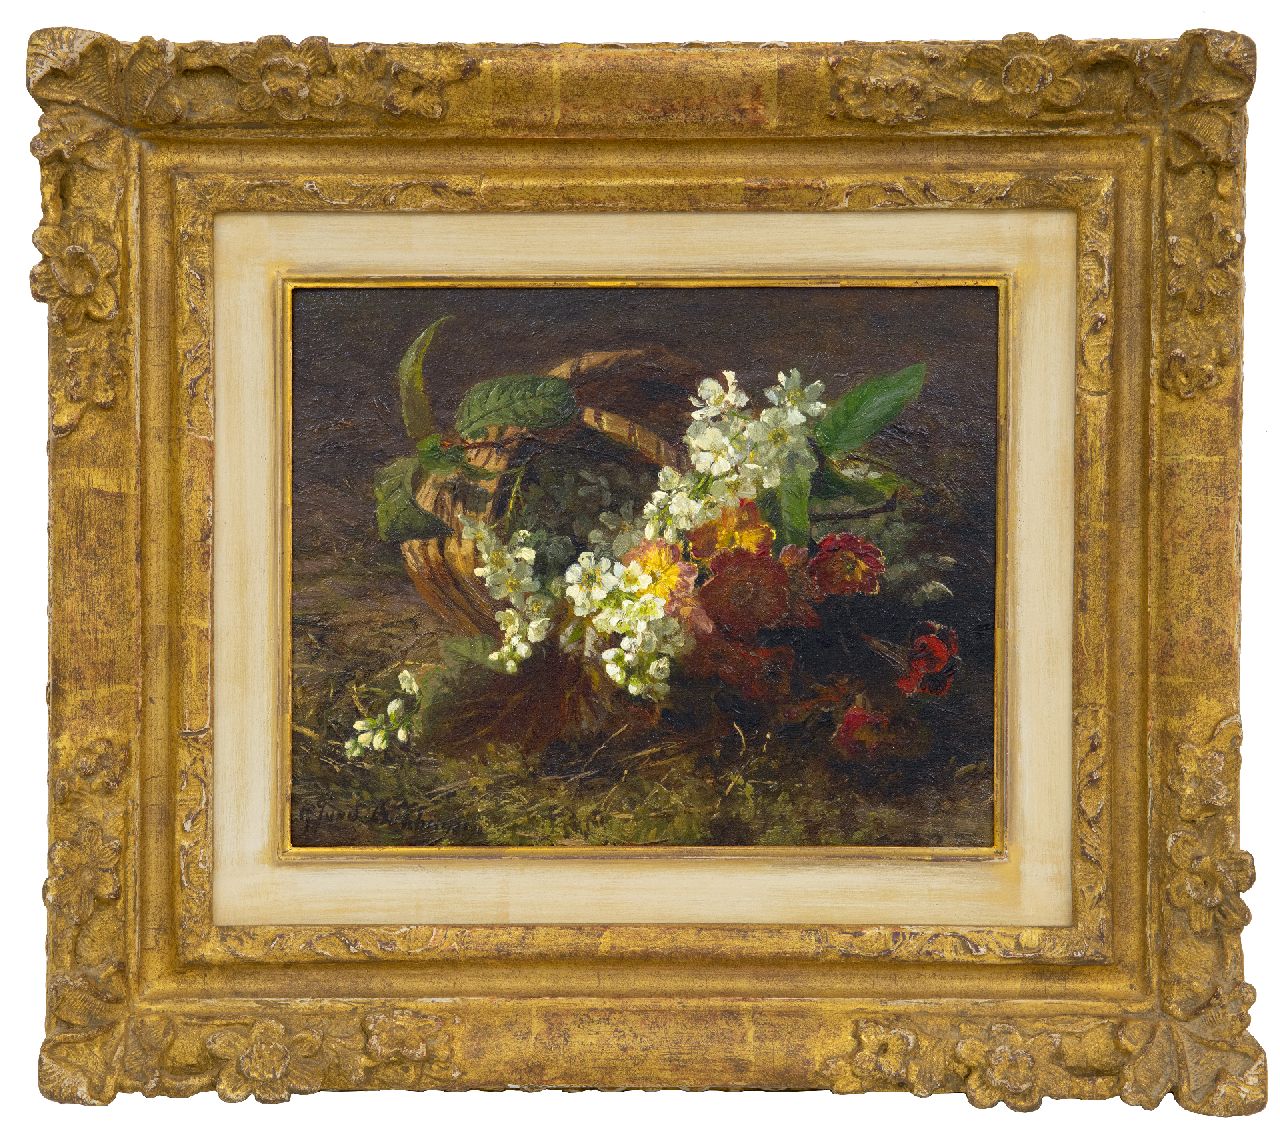 Sande Bakhuyzen G.J. van de | 'Gerardine' Jacoba van de Sande Bakhuyzen | Paintings offered for sale | Still life with cherry blossoms and primula, oil on panel 20.8 x 26.1 cm, signed l.l.